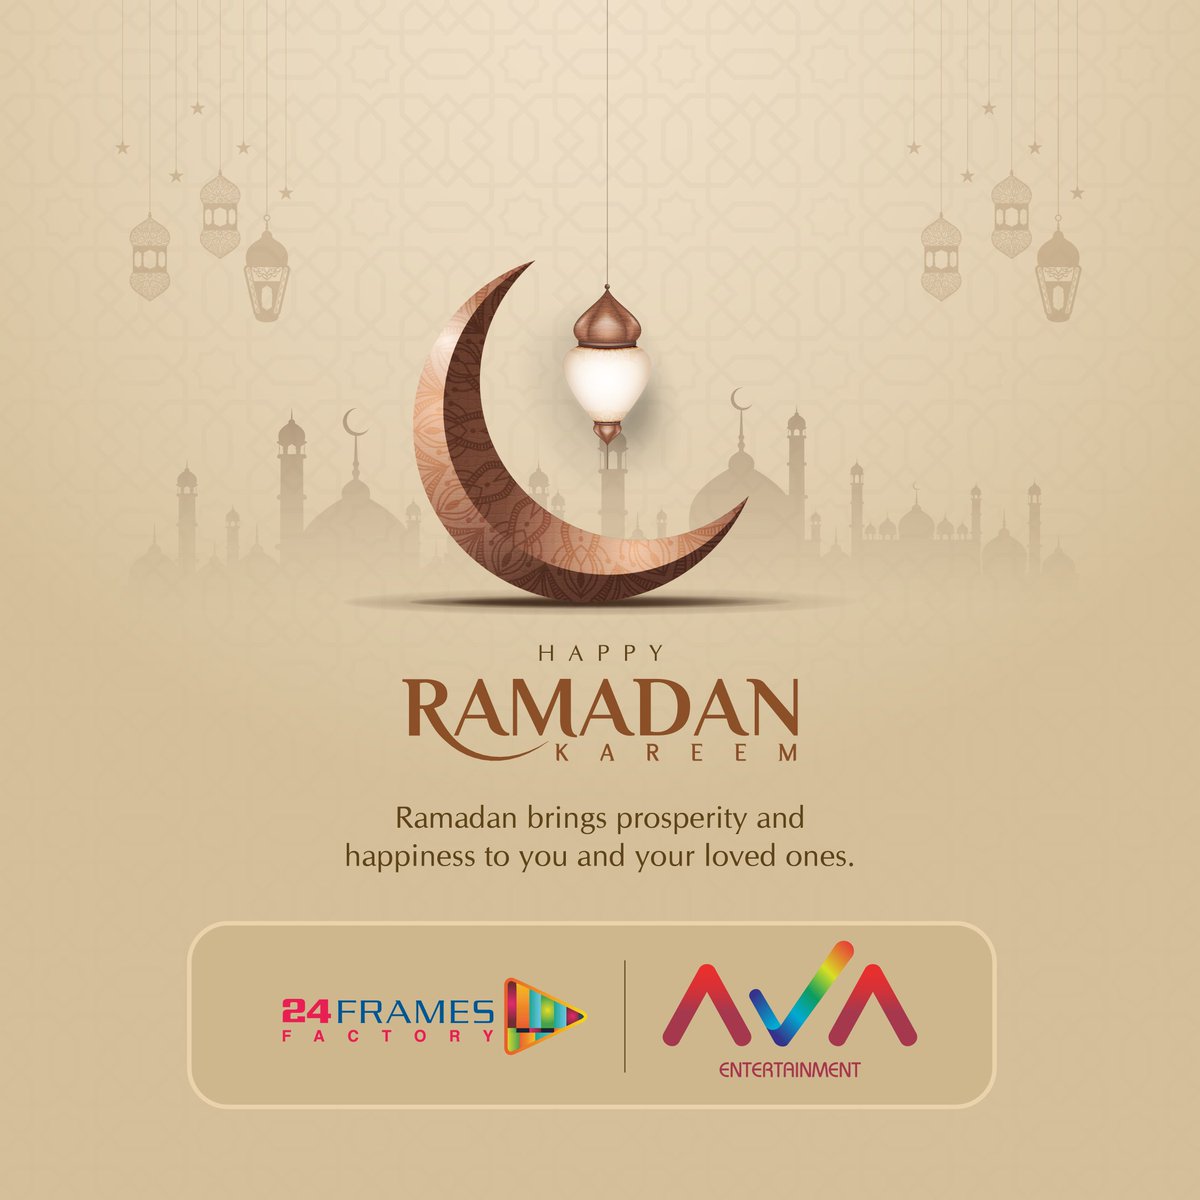 Team #𝐊𝐚𝐧𝐧𝐚𝐩𝐩𝐚🏹 sends warm wishes for a blessed and joyous Ramadan to all celebrating this sacred month.

#HappyRamadan #EidMubarak #EidAlFitr2024